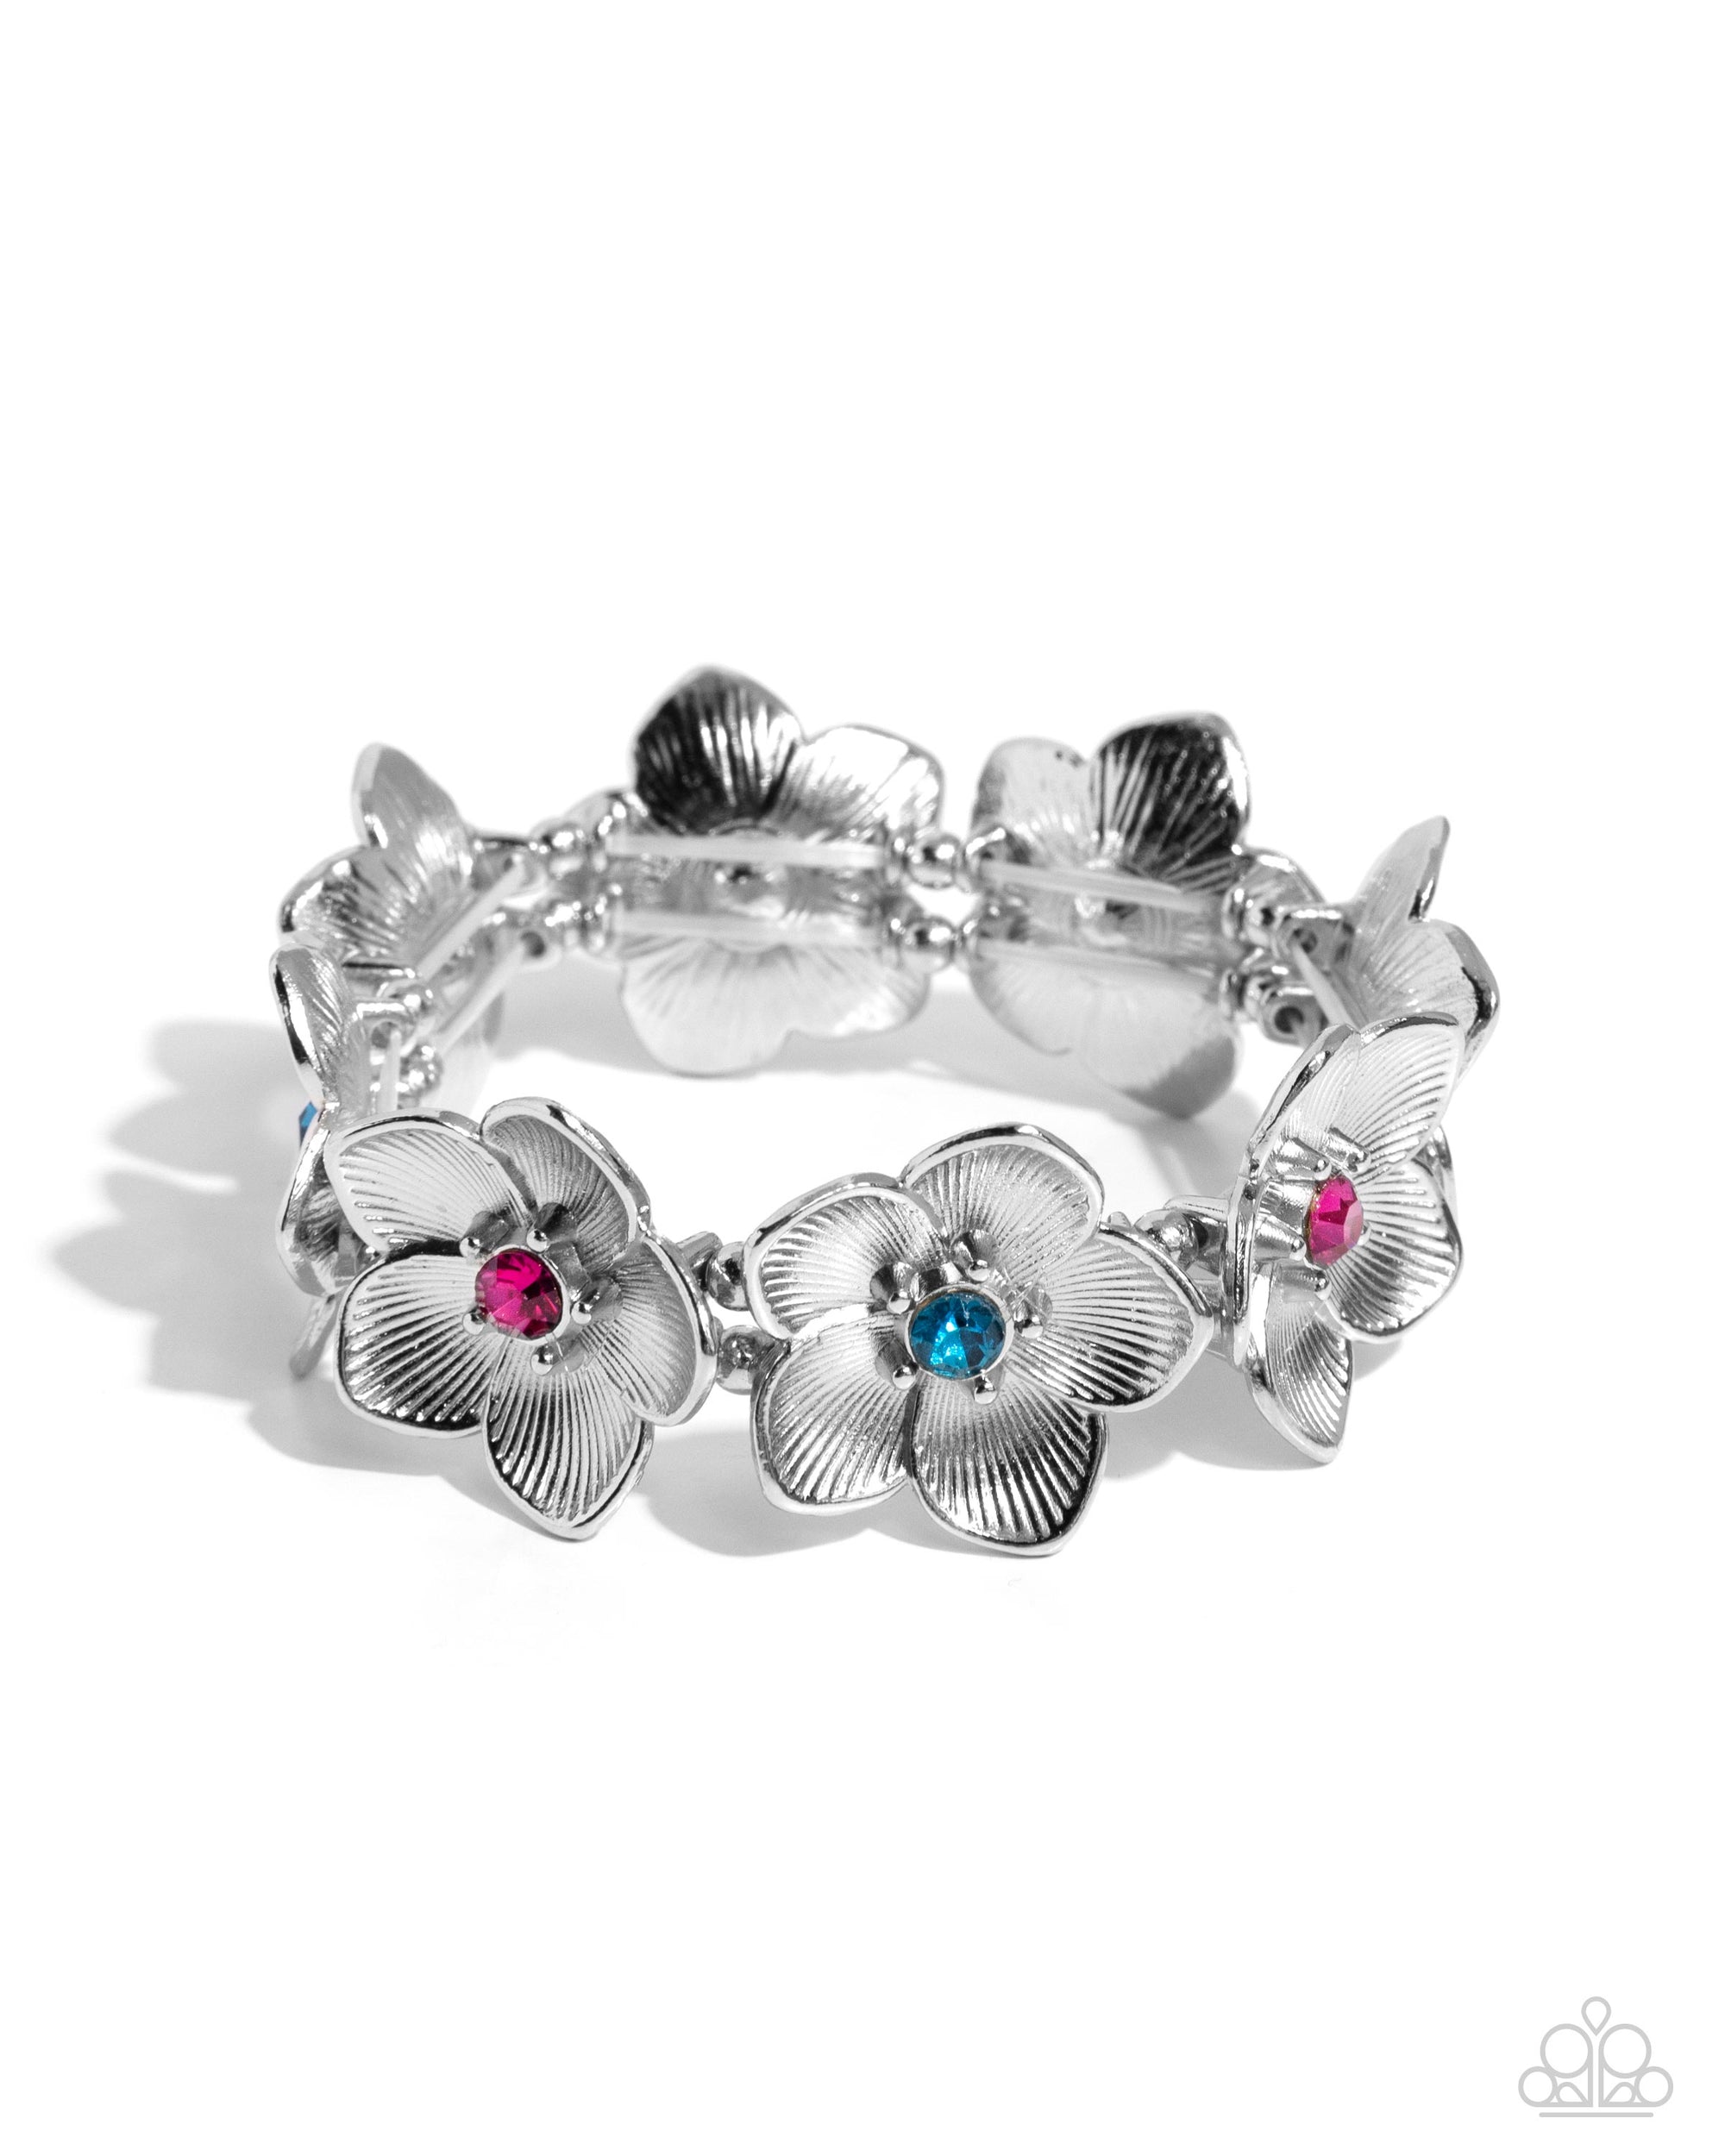 General Grandeur Blue Gem & Silver Flower Bracelet - Paparazzi Accessories- lightbox - CarasShop.com - $5 Jewelry by Cara Jewels